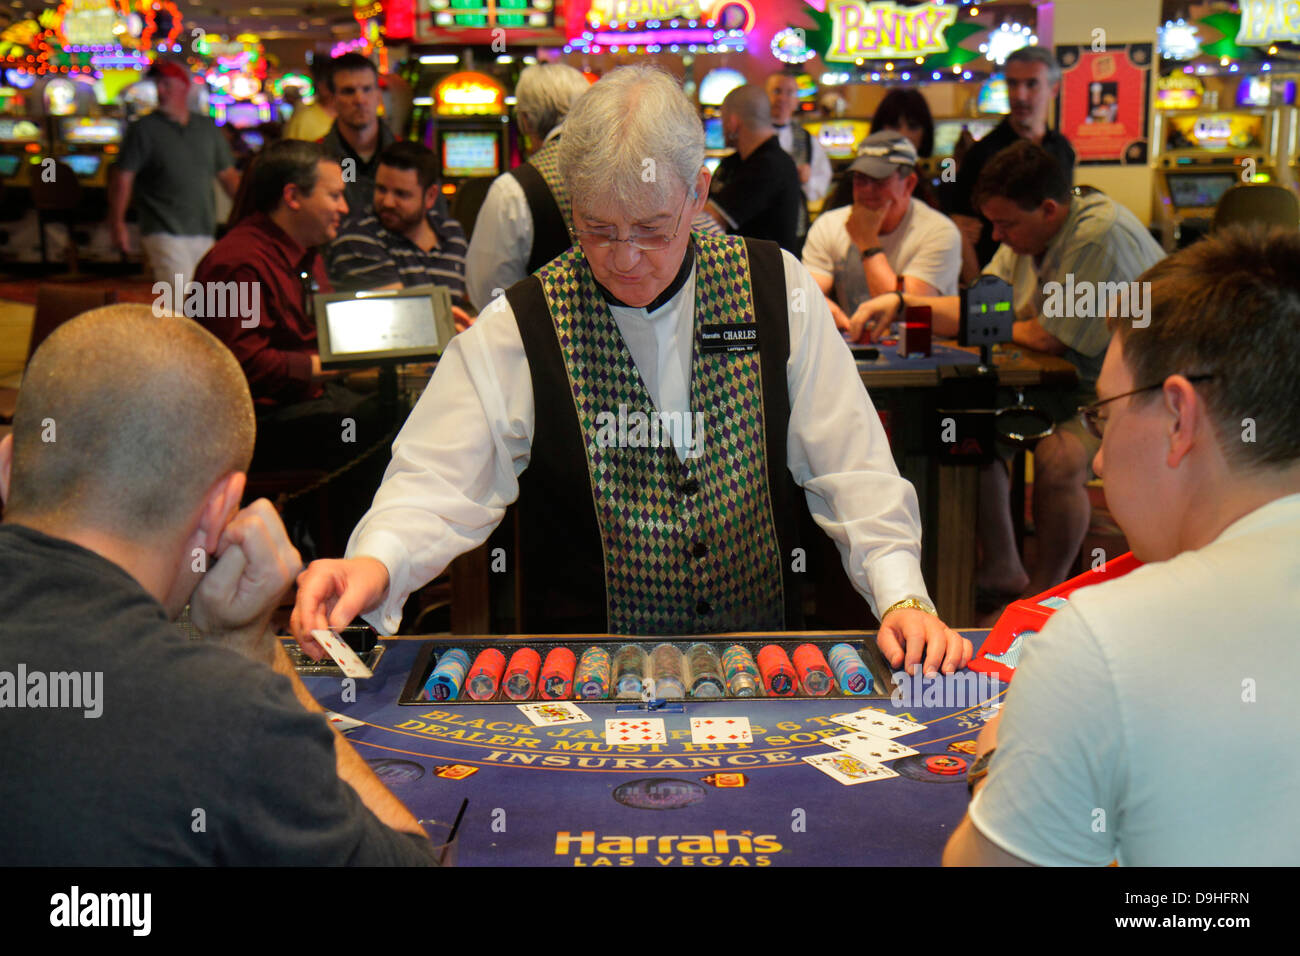 Las Vegas Nevada,The Strip,South Las Vegas Boulevard,Harrah's Las Vegas,hotel,casino,gambler,gamble,gambling,dealer,Blackjack,employee worker workers Stock Photo